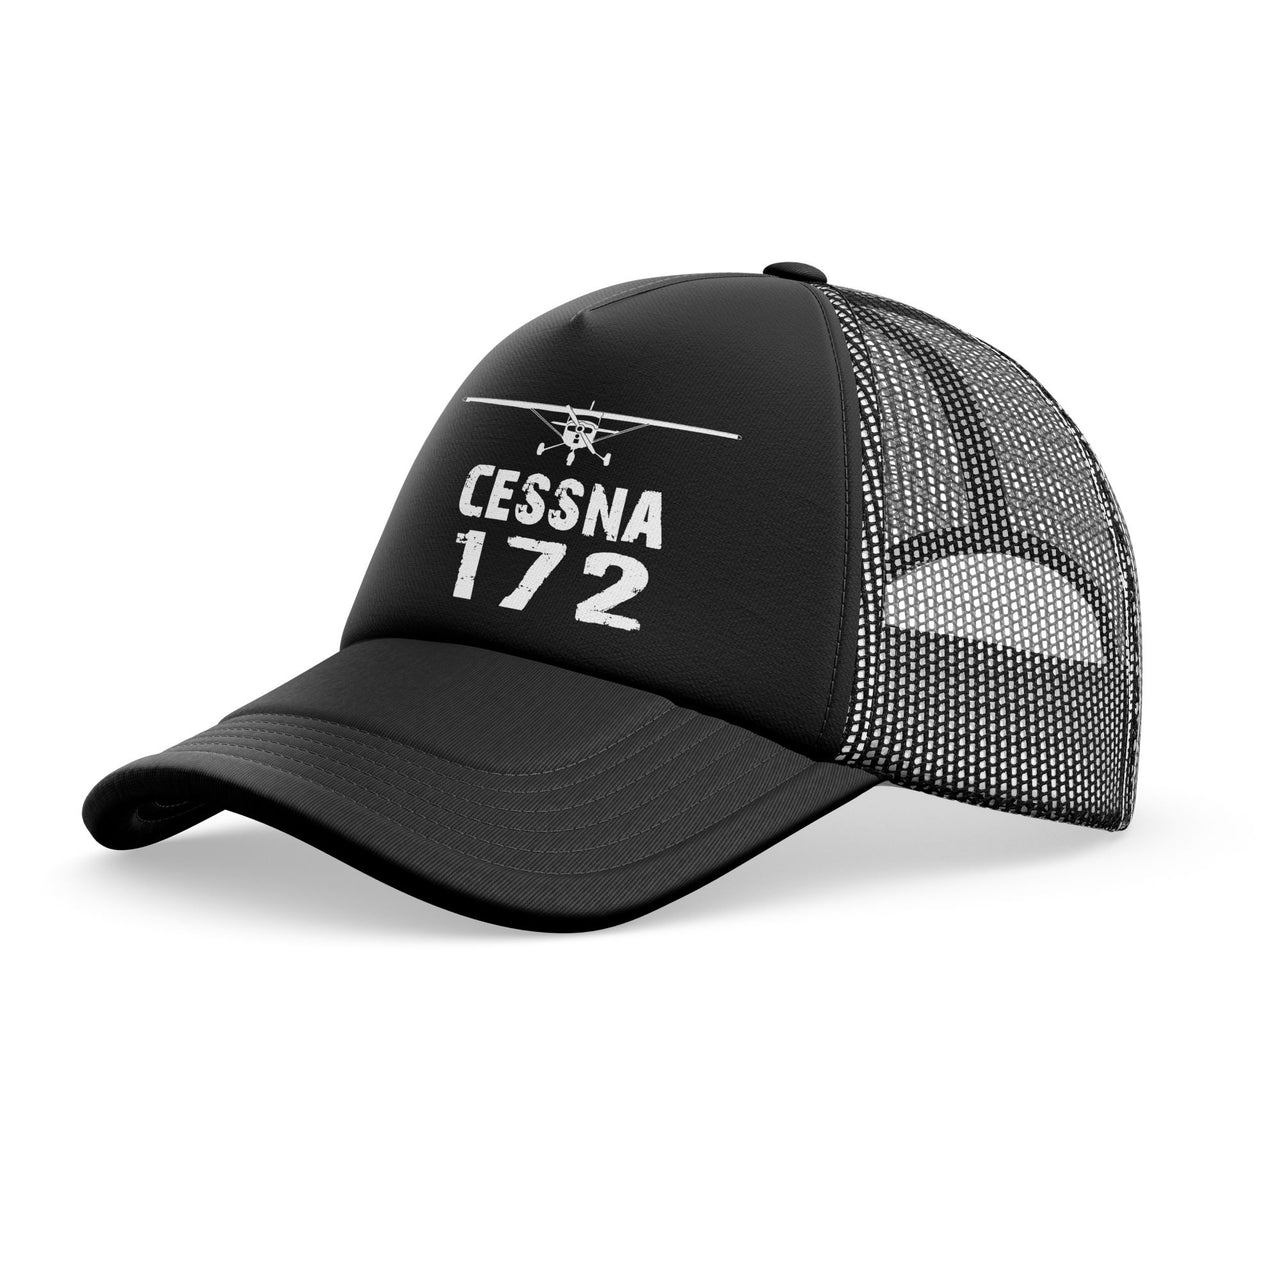 Cessna 172 & Plane Designed Trucker Caps & Hats